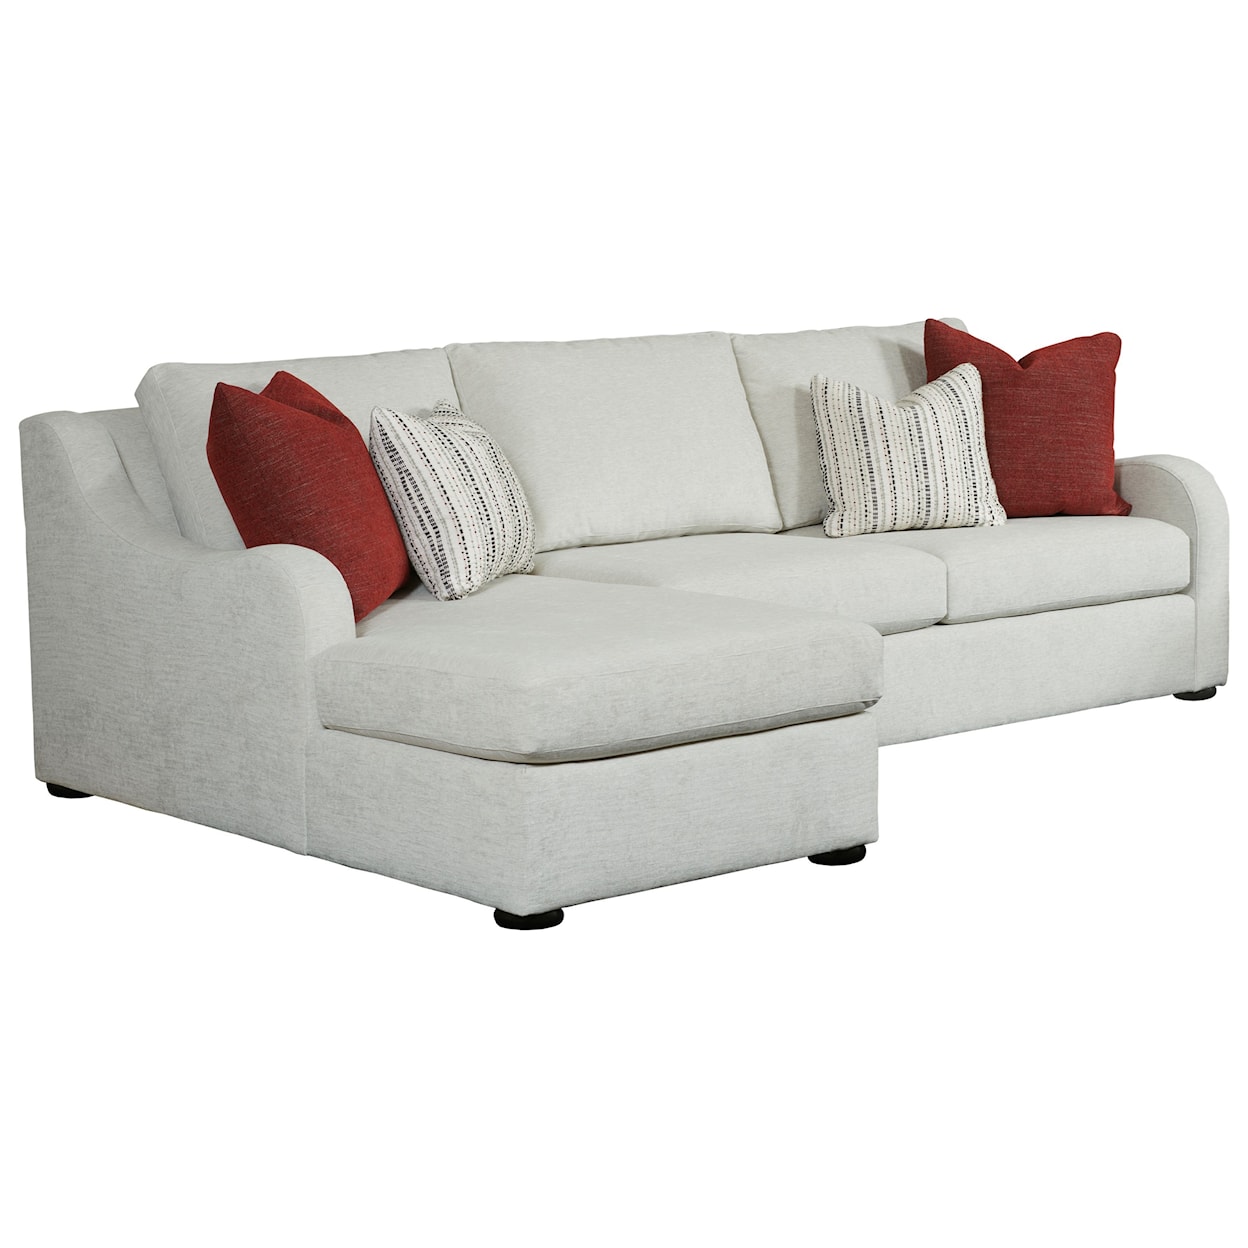 Kincaid Furniture Comfort Select Chaise Sofa